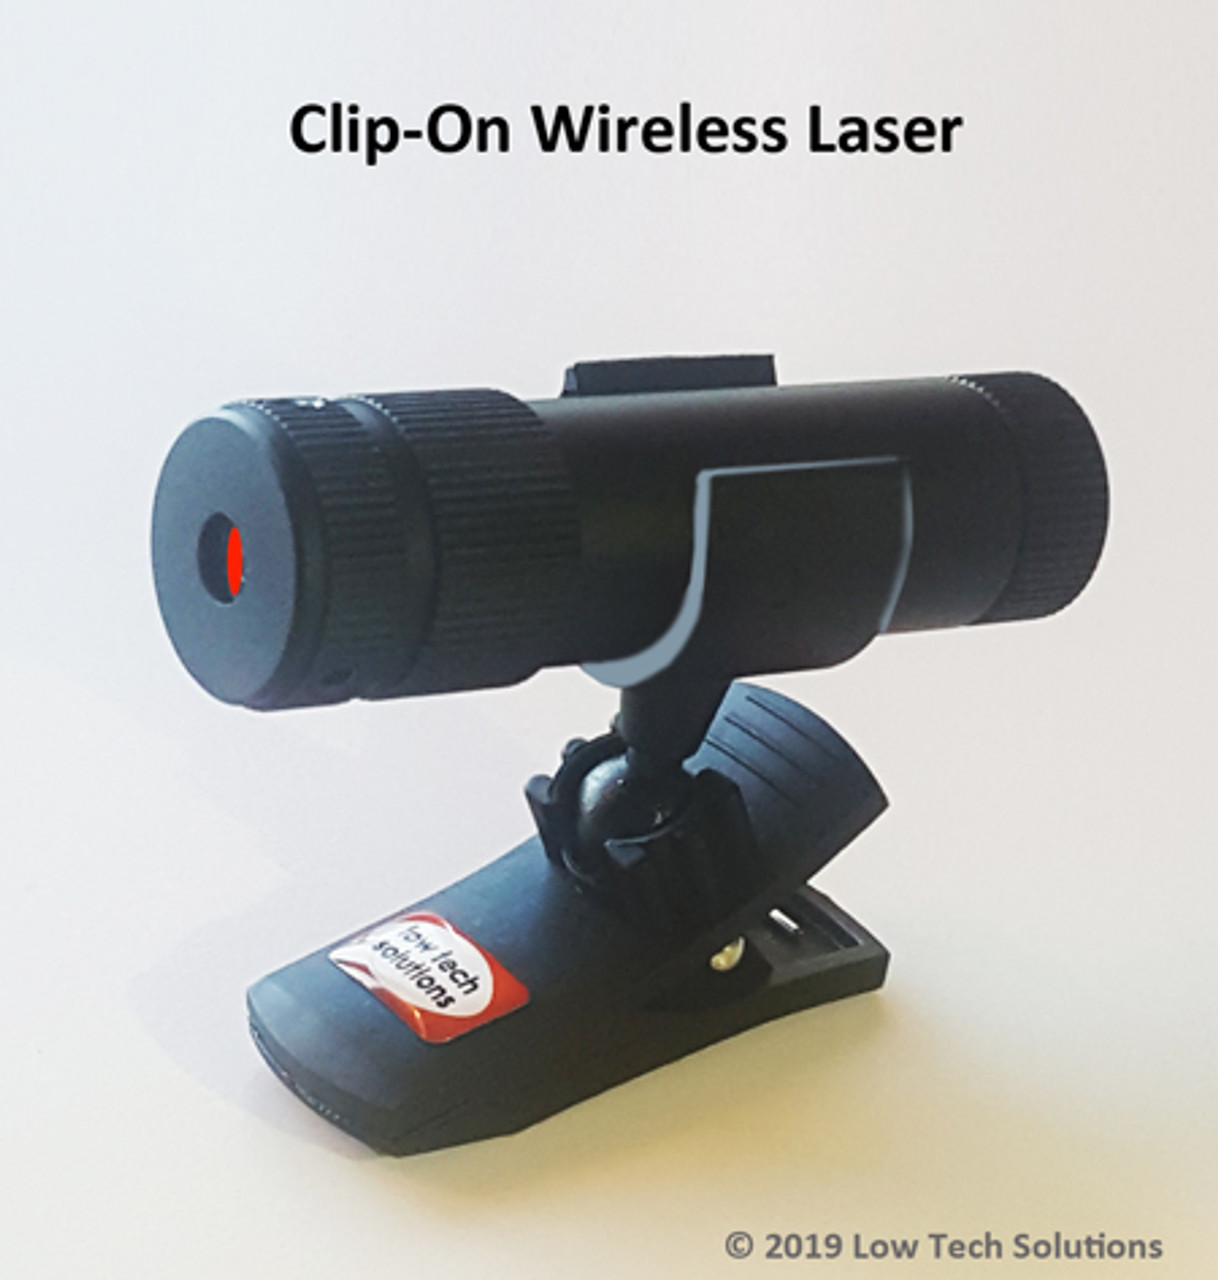 Clip-On Wireless Laser.